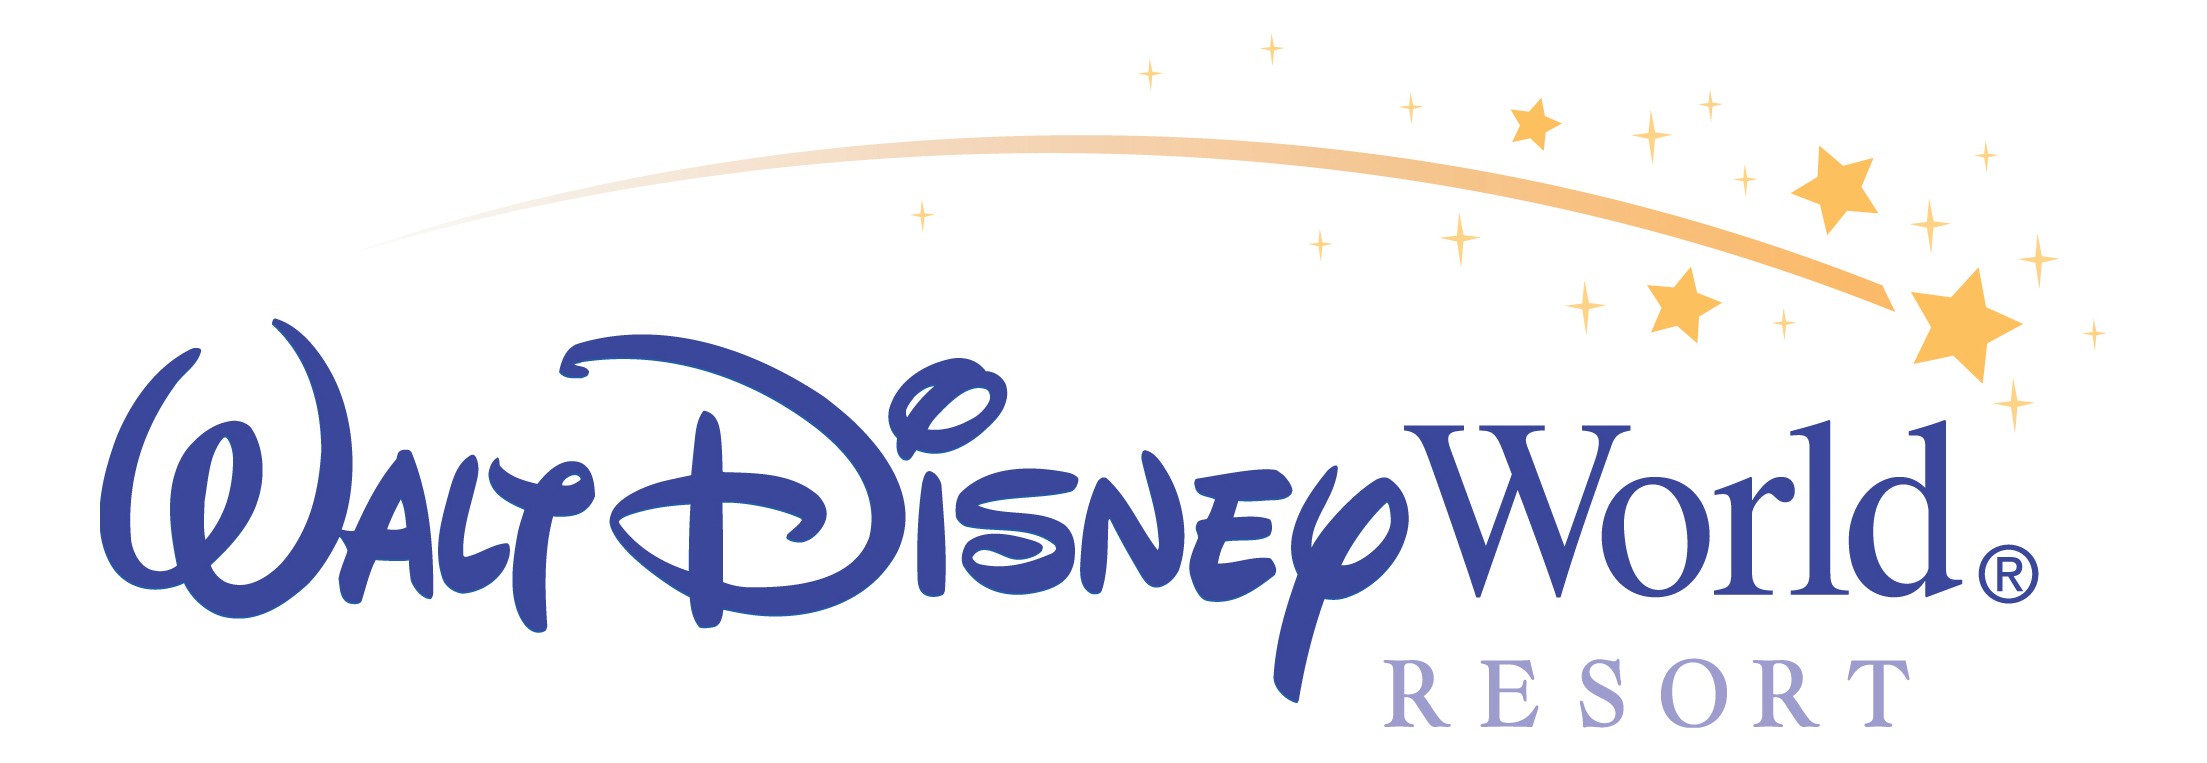 Walt Disney Company